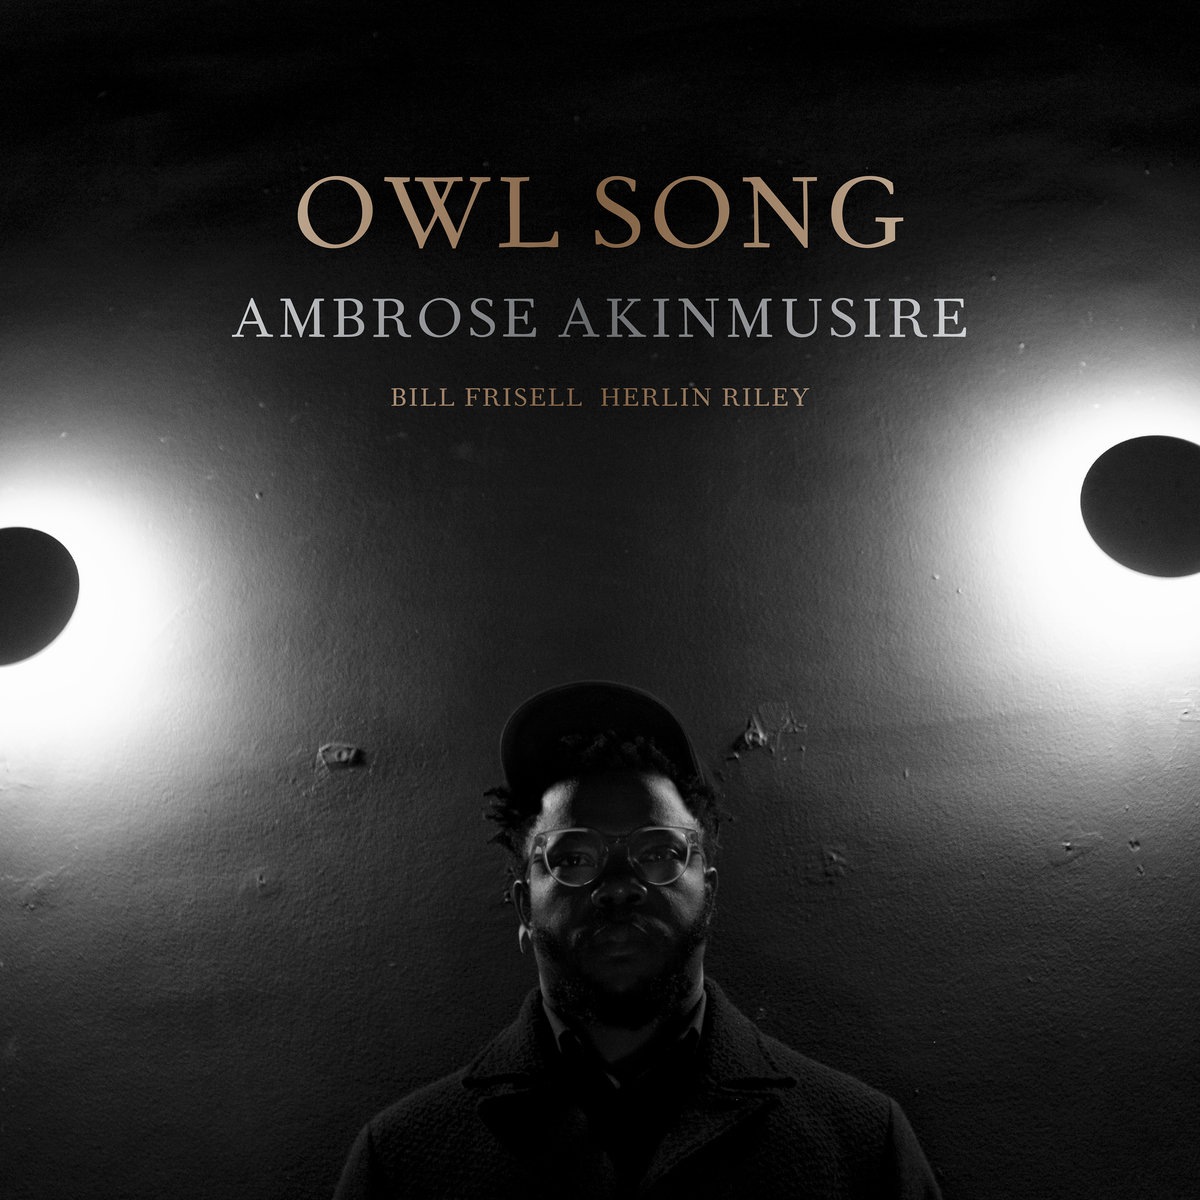 Owl Song Ambrose Akinmusire, Bill Frisell, Herlin Riley